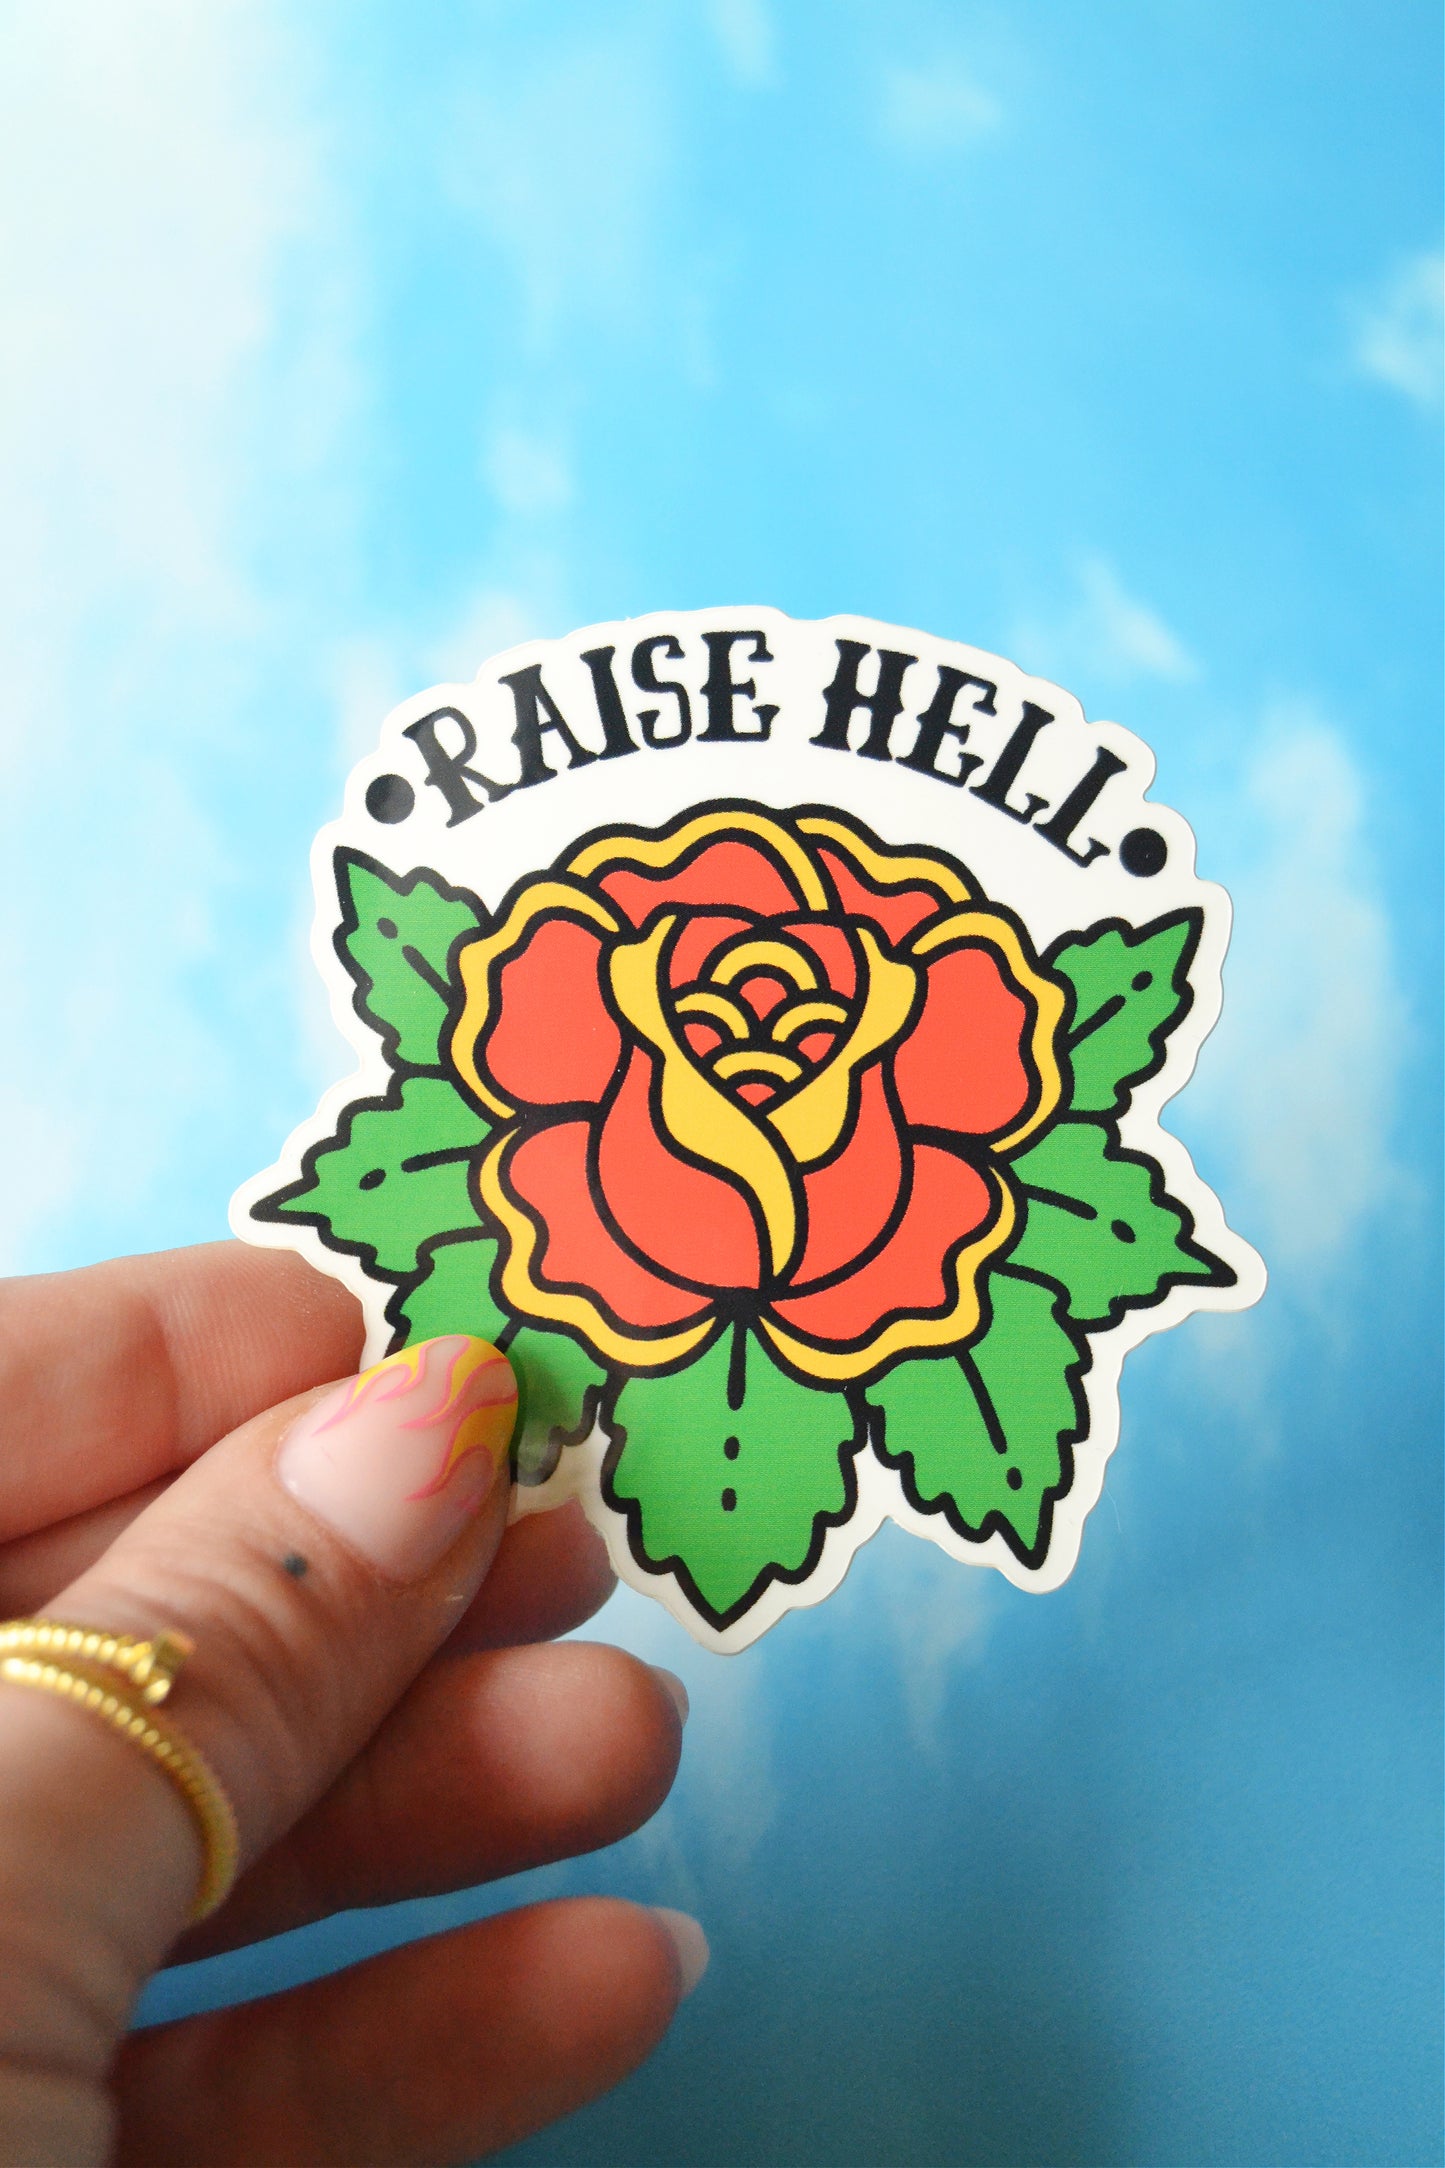 Raise Hell Sticker